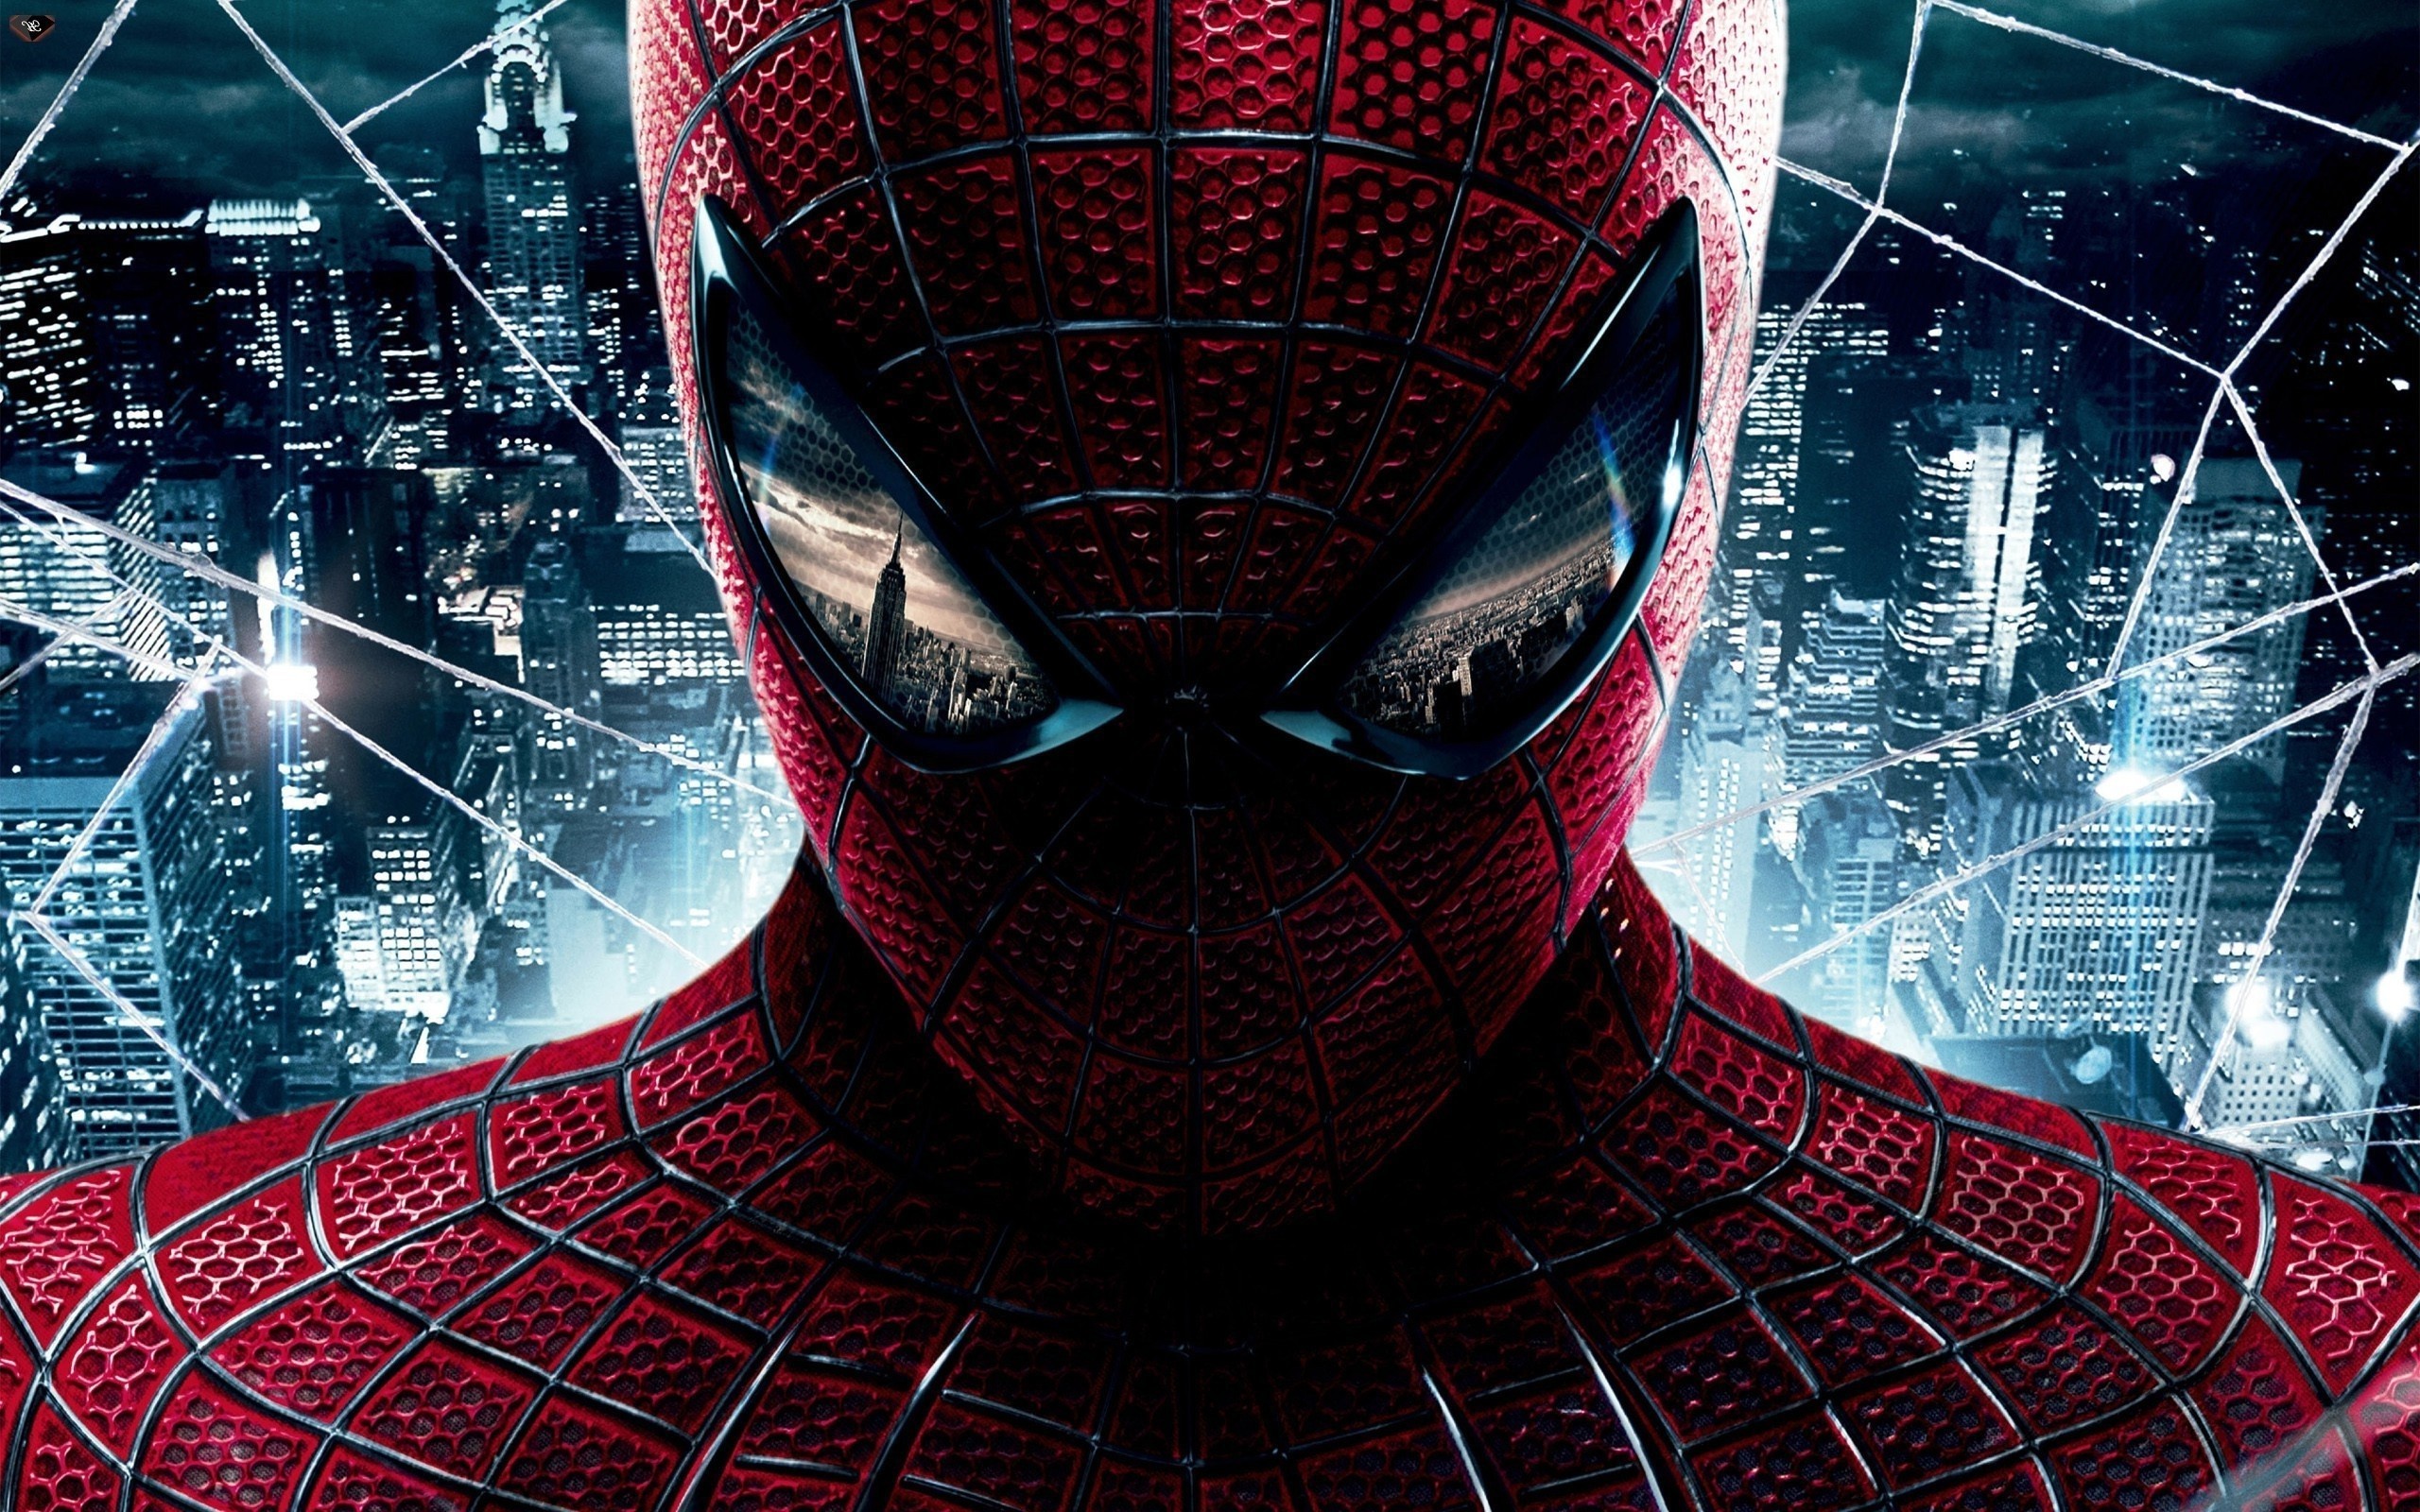 Spiderman wallpaper ·① Download free stunning HD ...